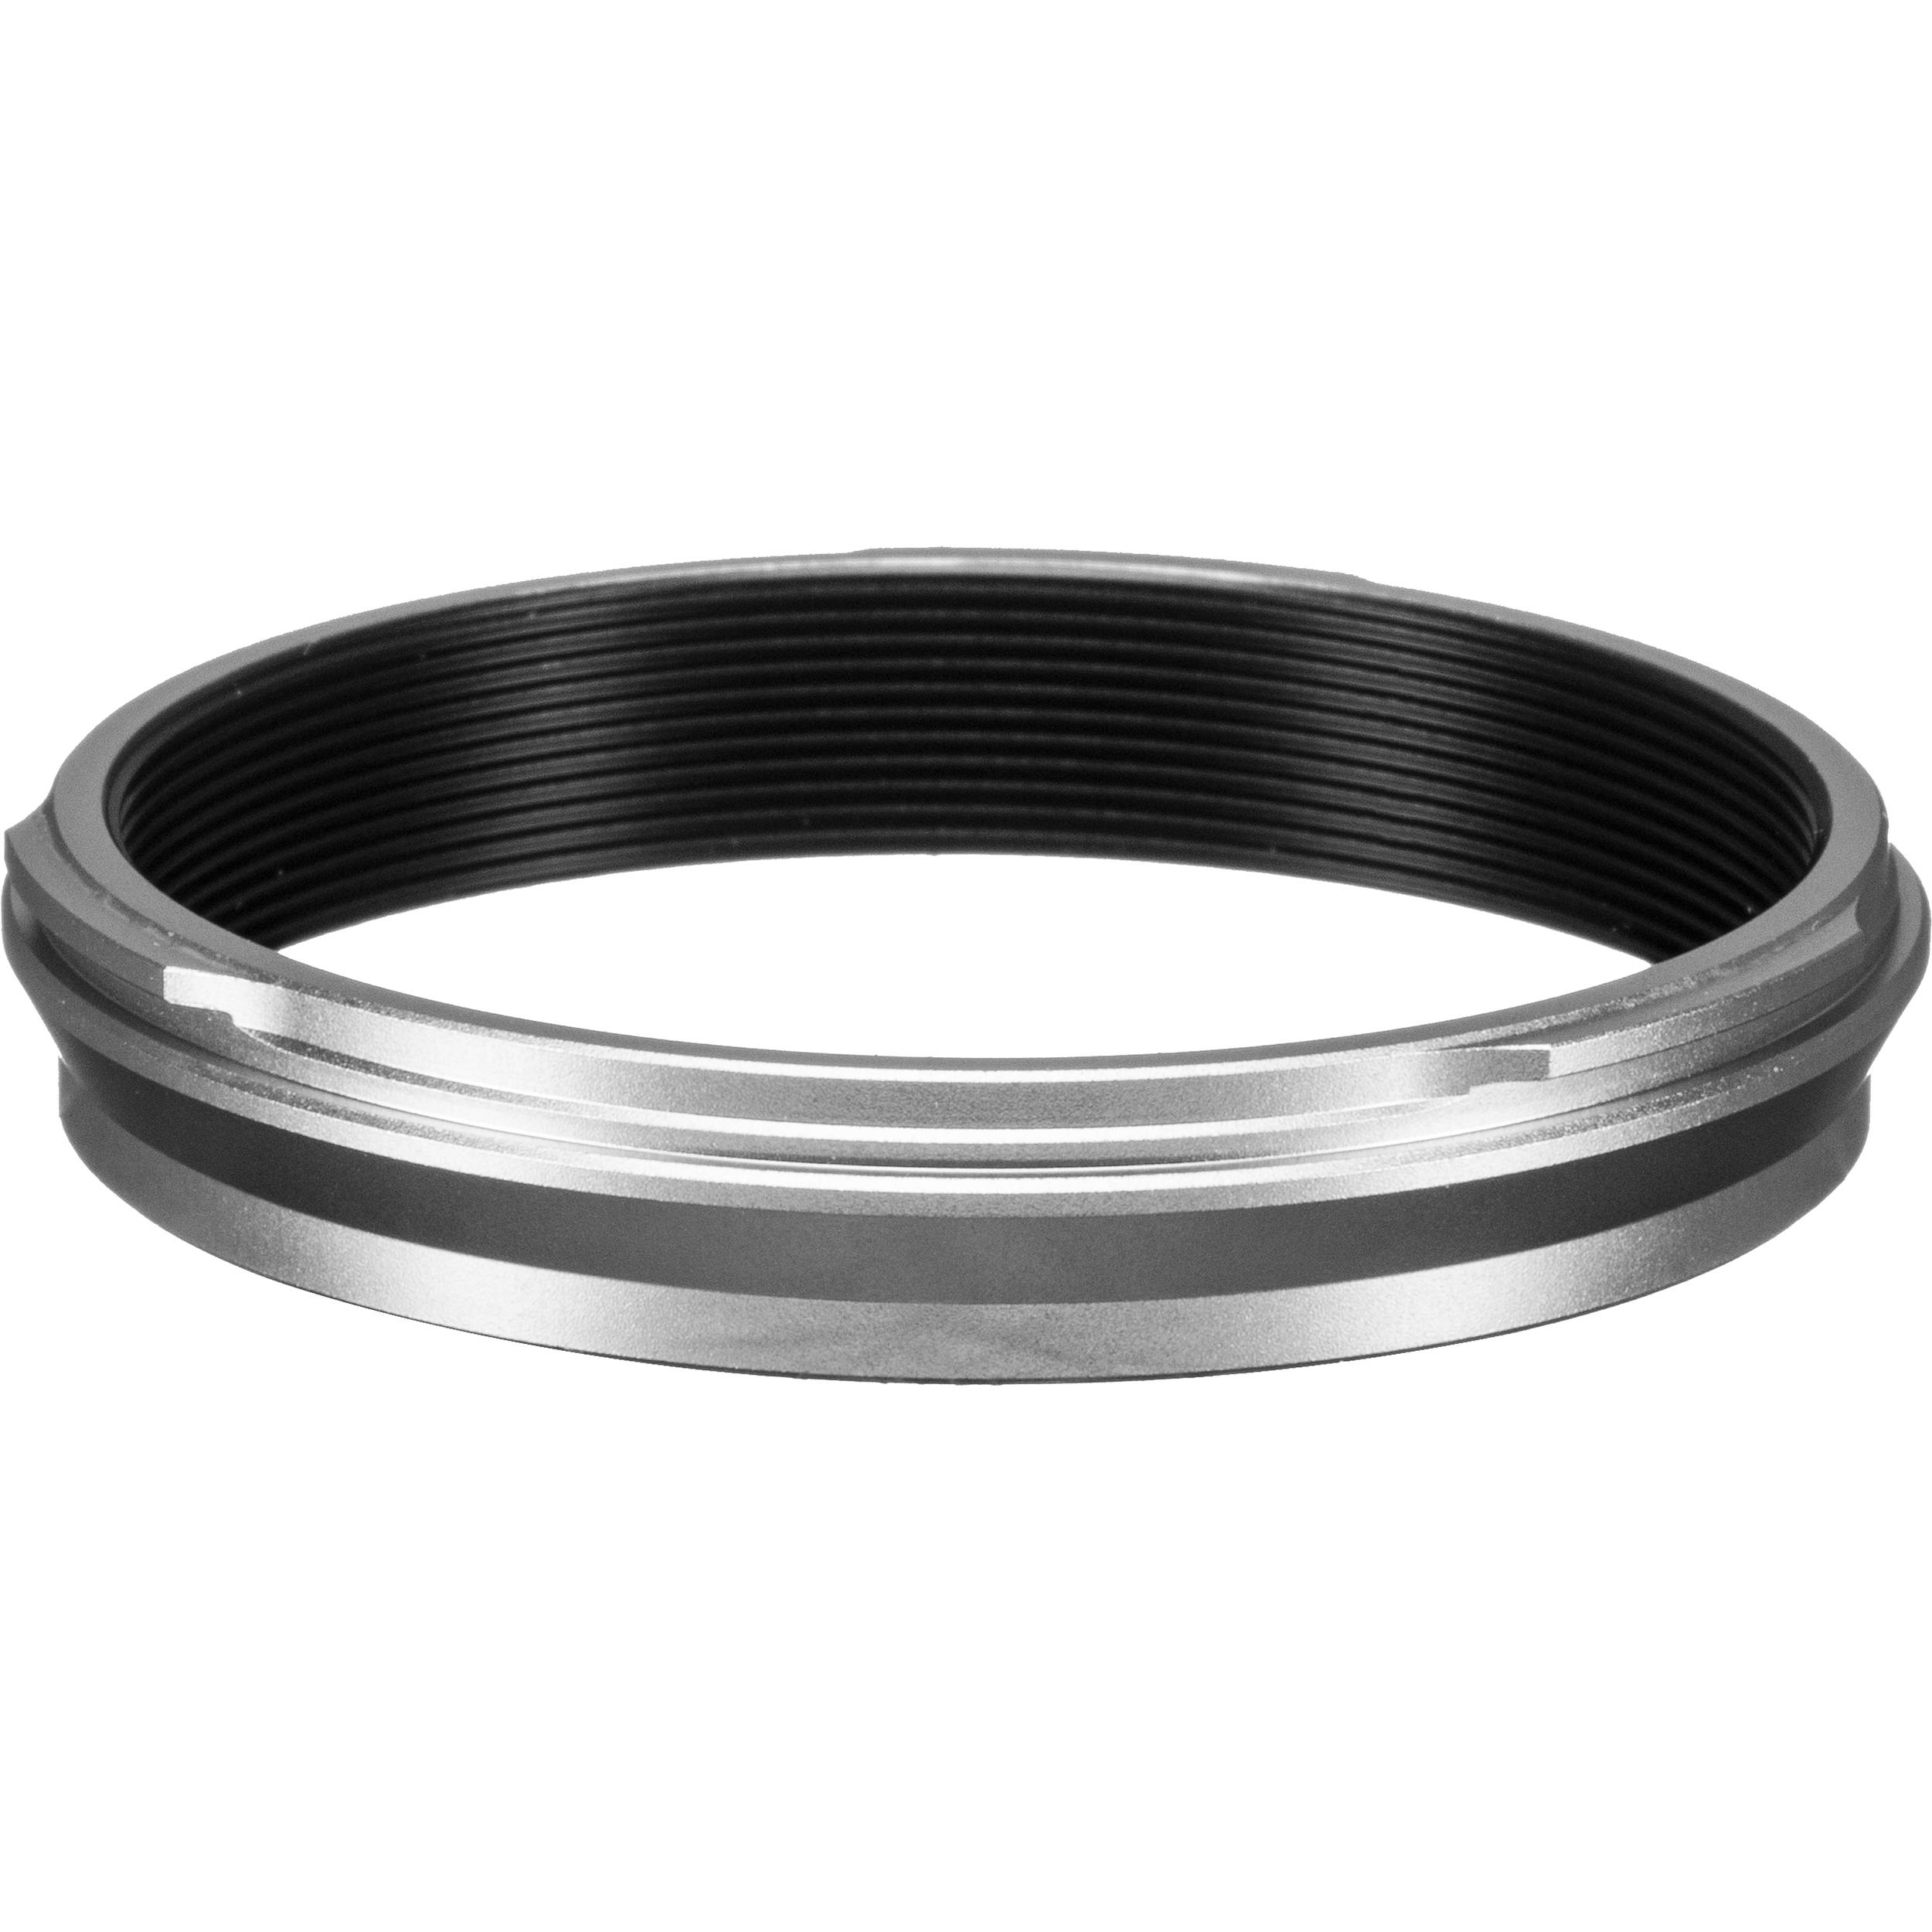 Fujifilm X100 Lens Hood + Adapter Ring ARX100 - Silver